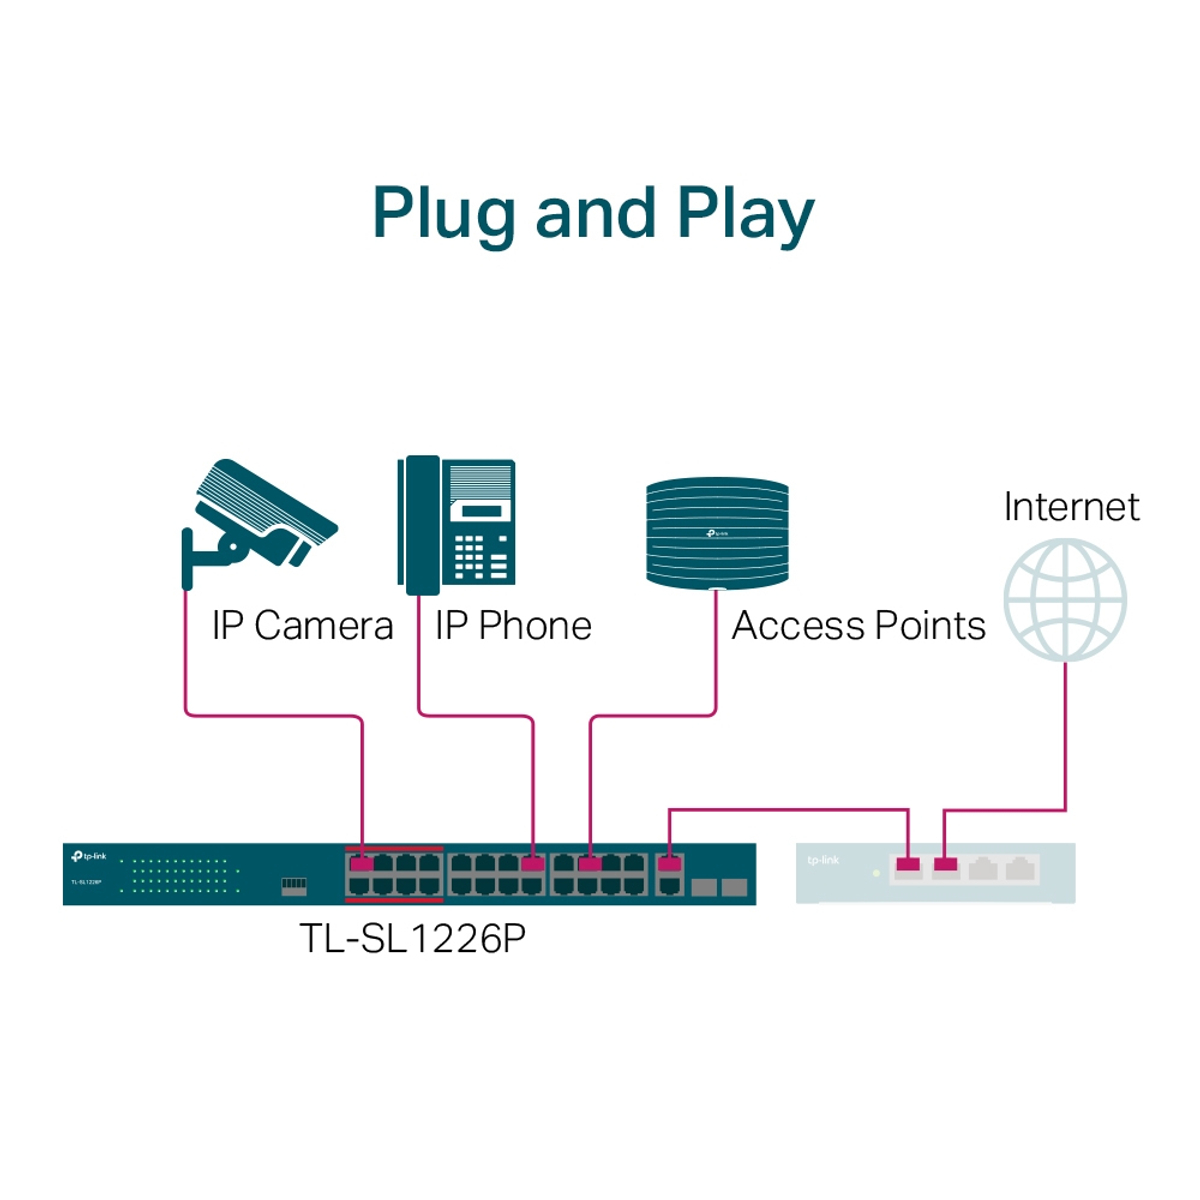 24-Port 10/100 + 2P Gigabit PoE+ Switch